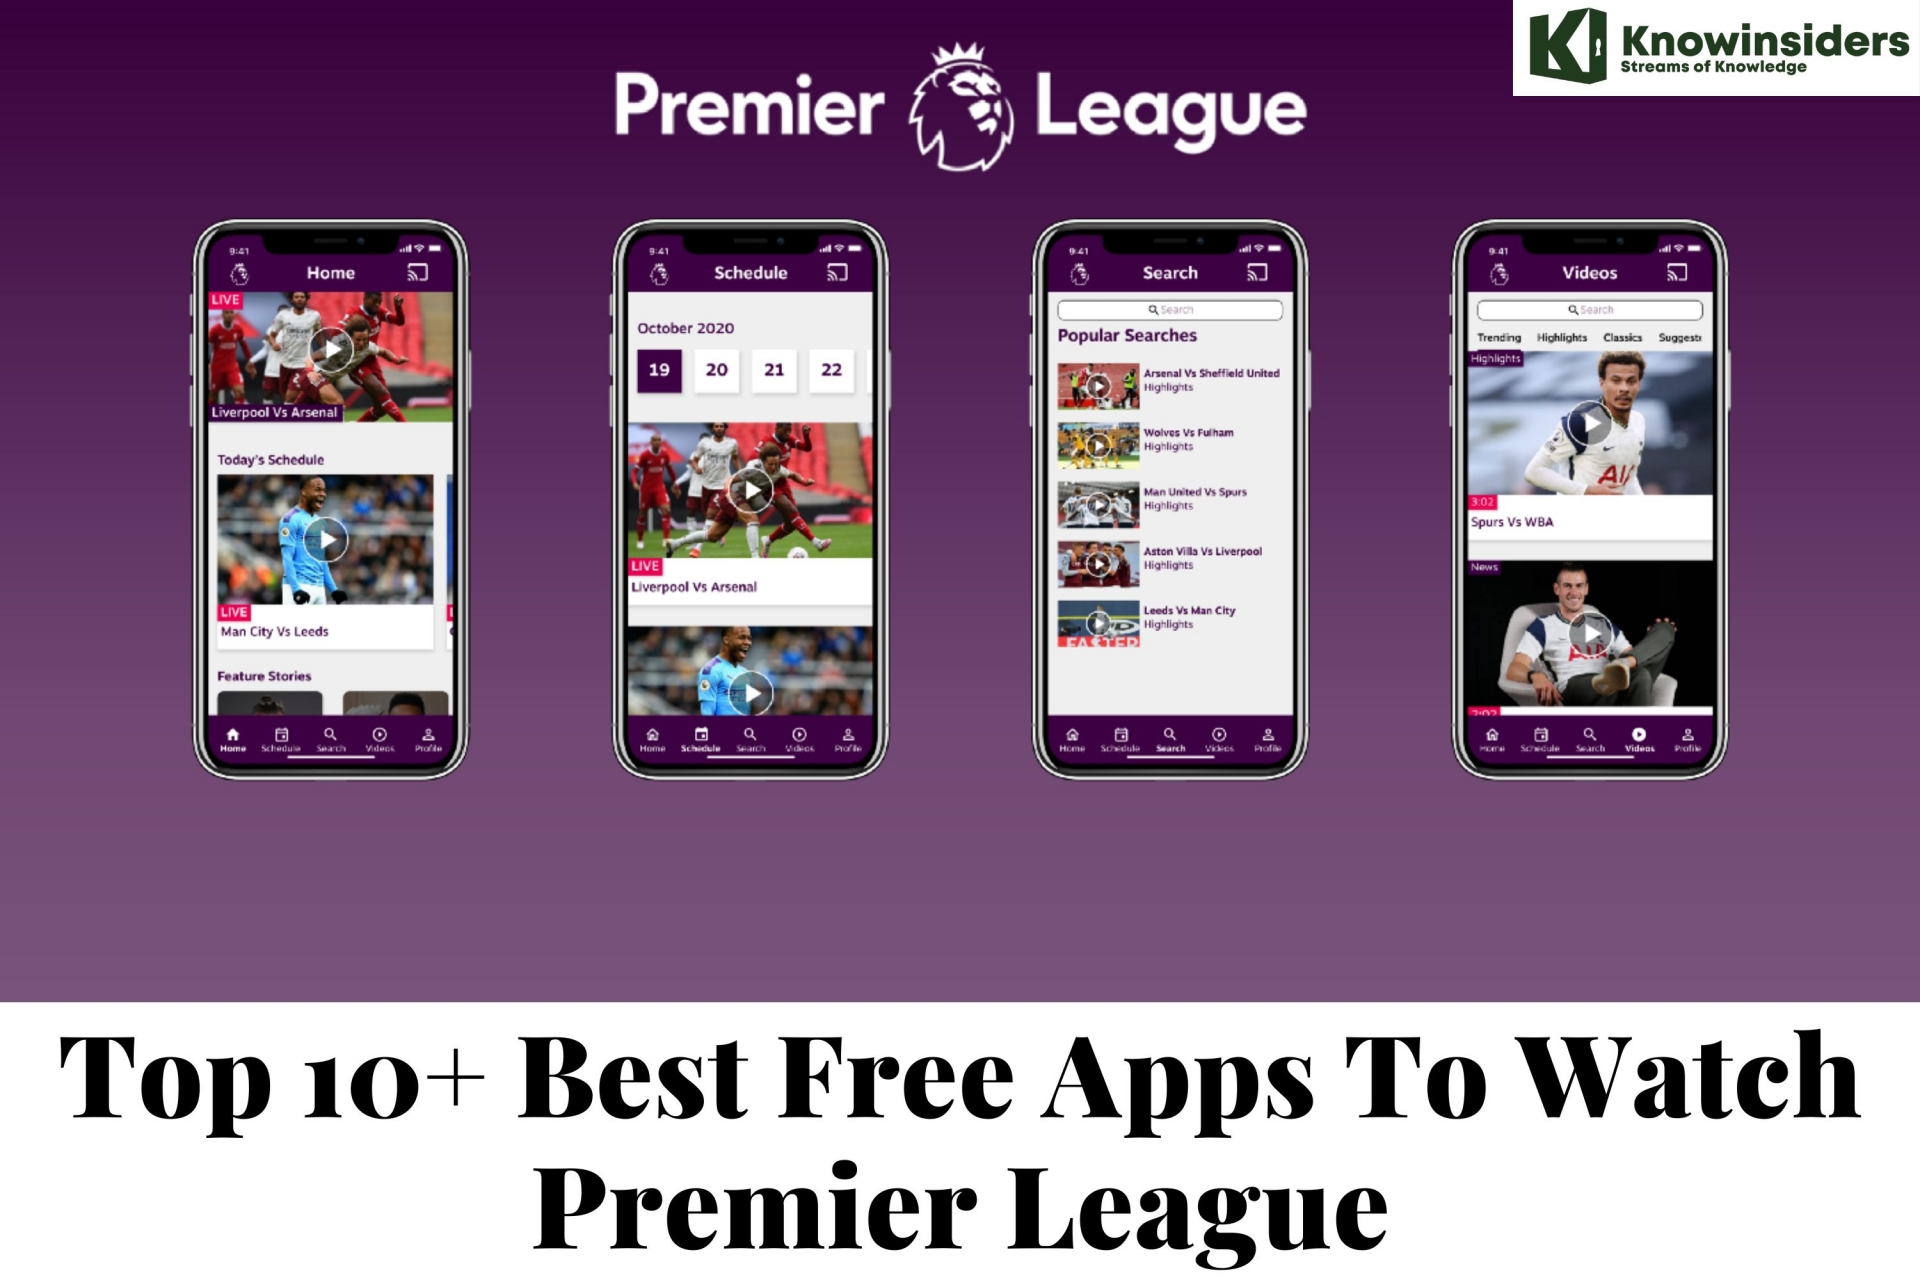 Top 10+ Best Free Apps To Watch Premier League